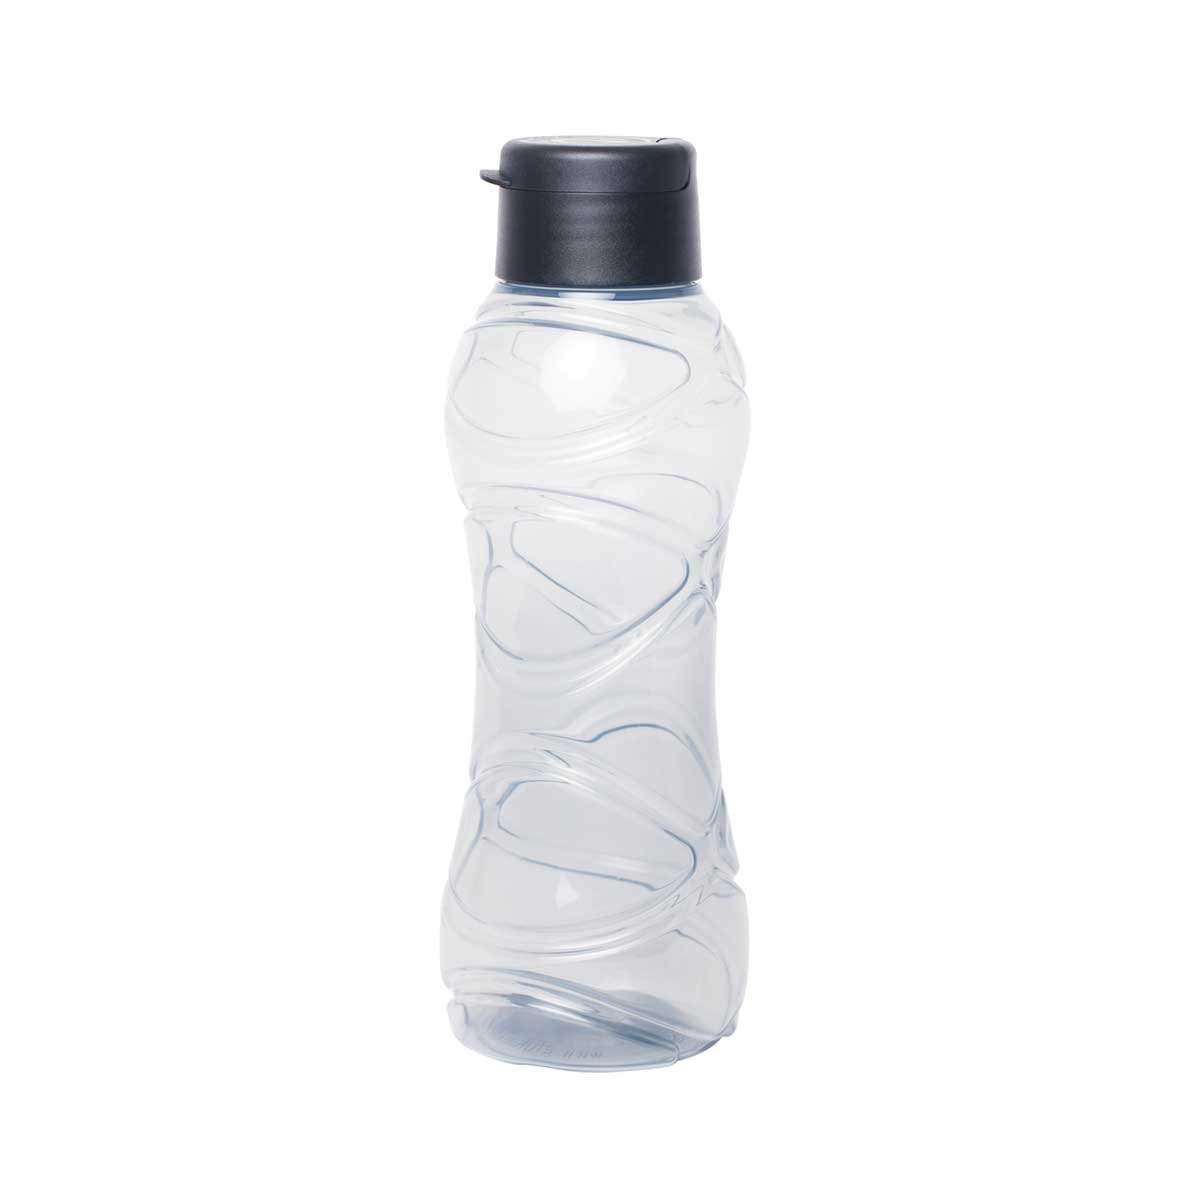 Botella Gluk Crack Ecológica Reutilizable Humo, 1 Litro